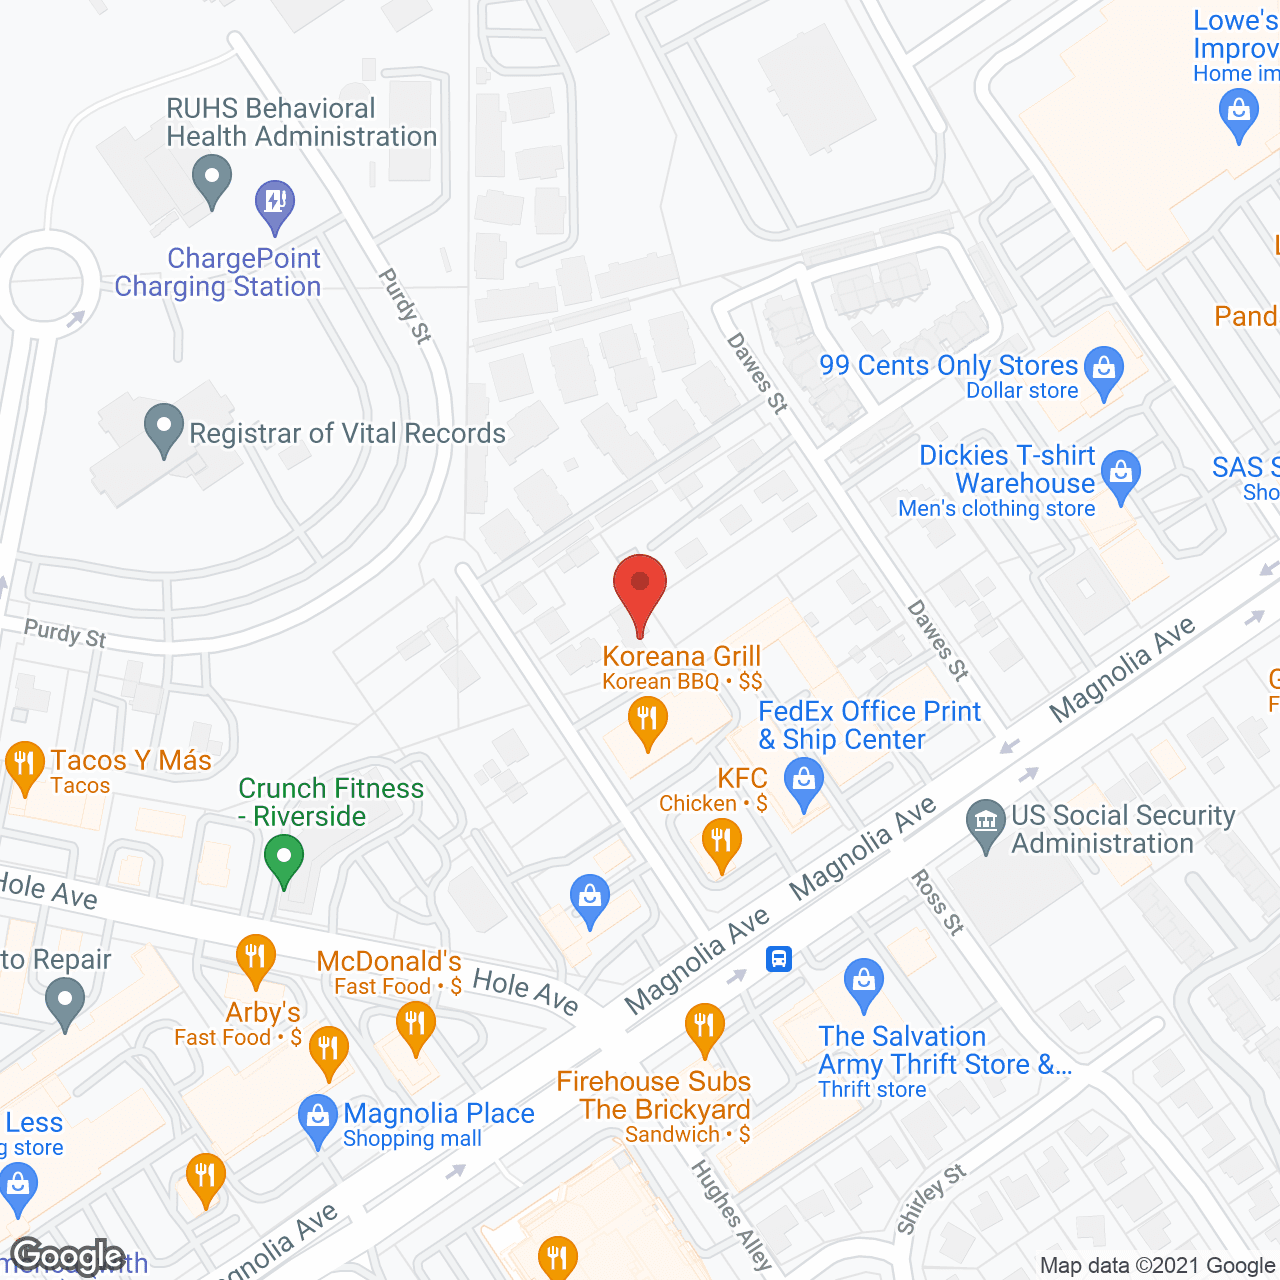 Megginson Place II in google map